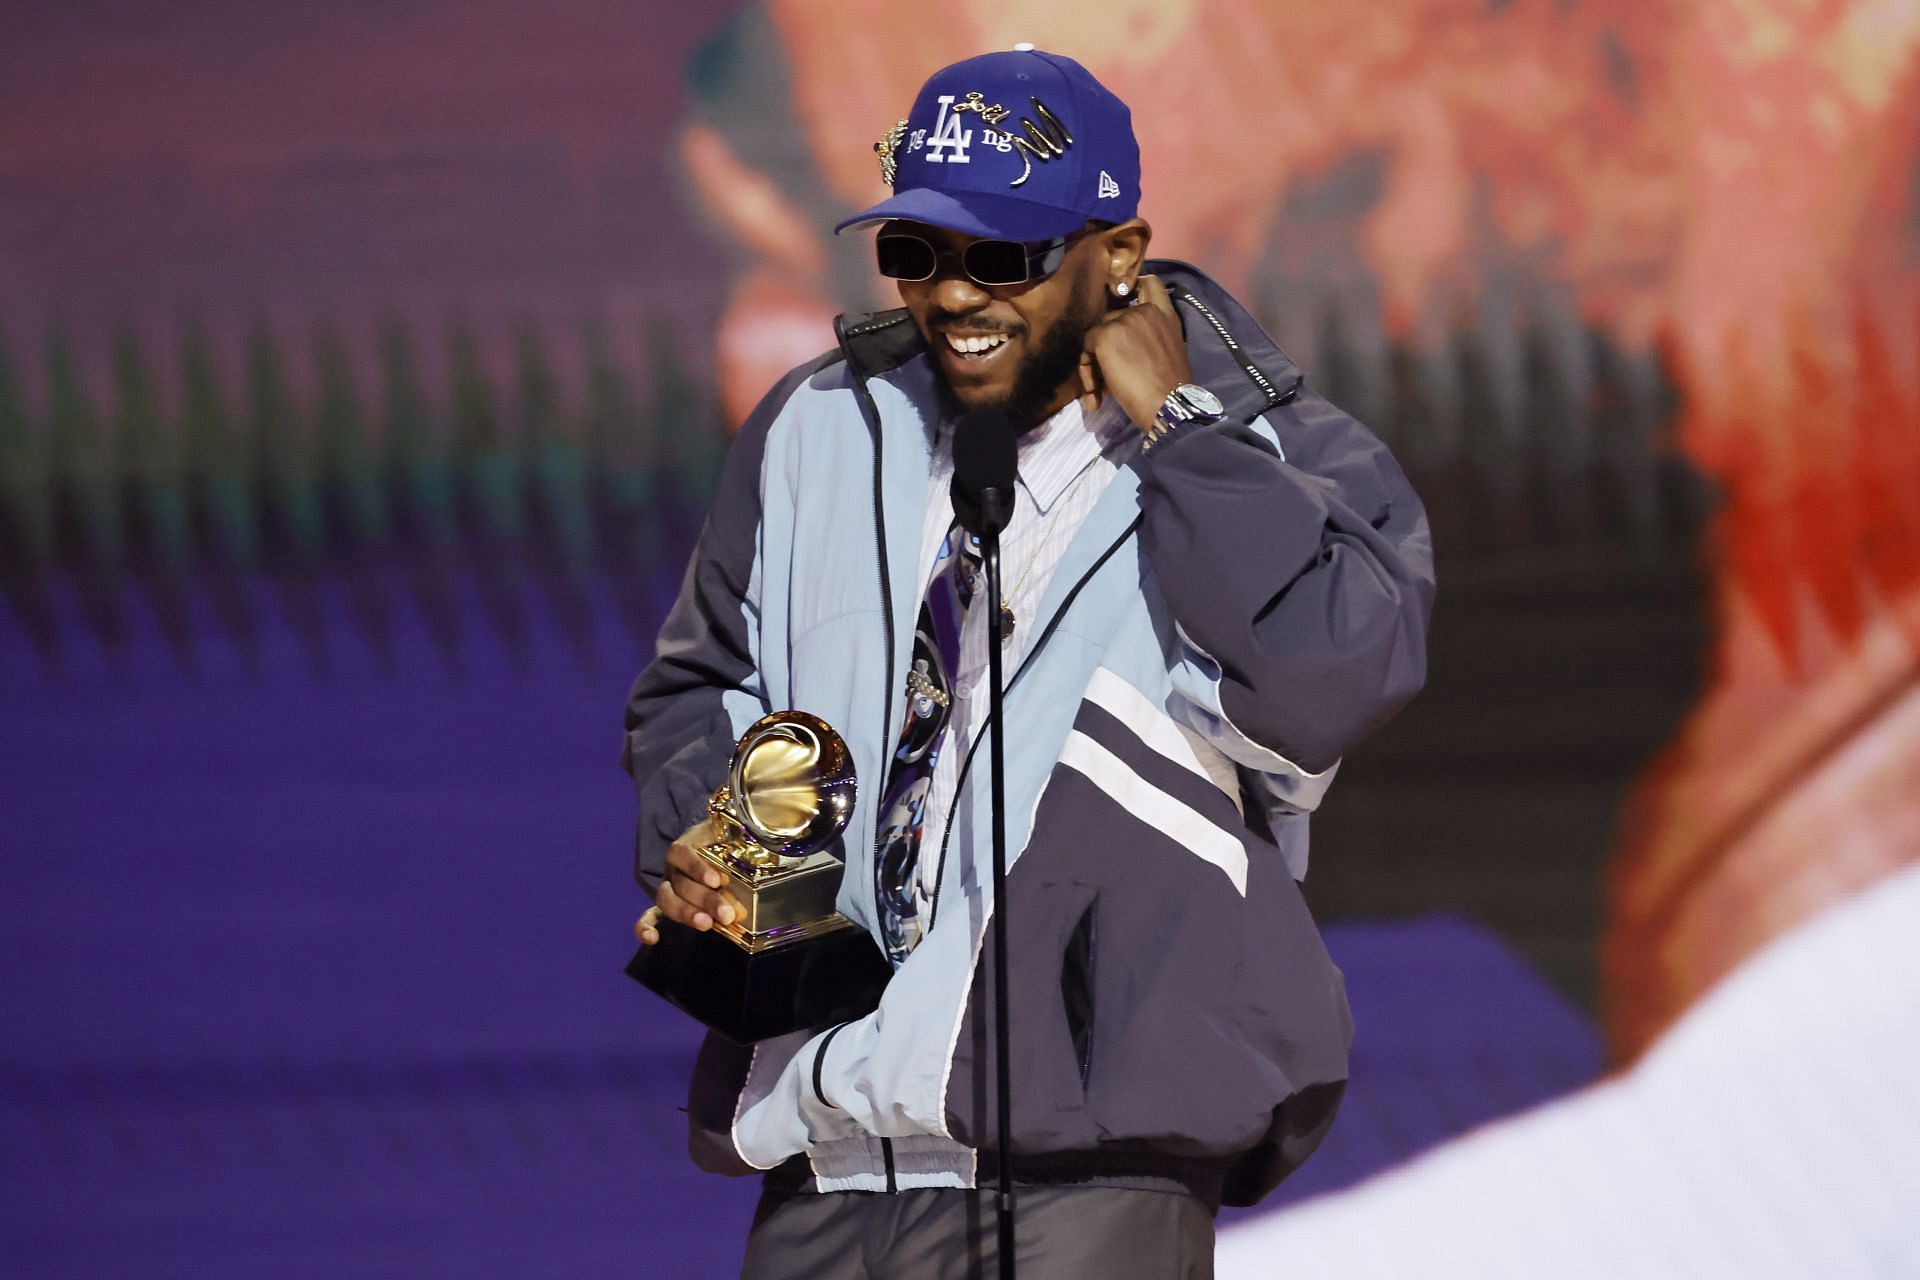 Lamar at 65th GRAMMY Awards (Image via Getty) 1asjkdhasjhdgashgdahsgdhas